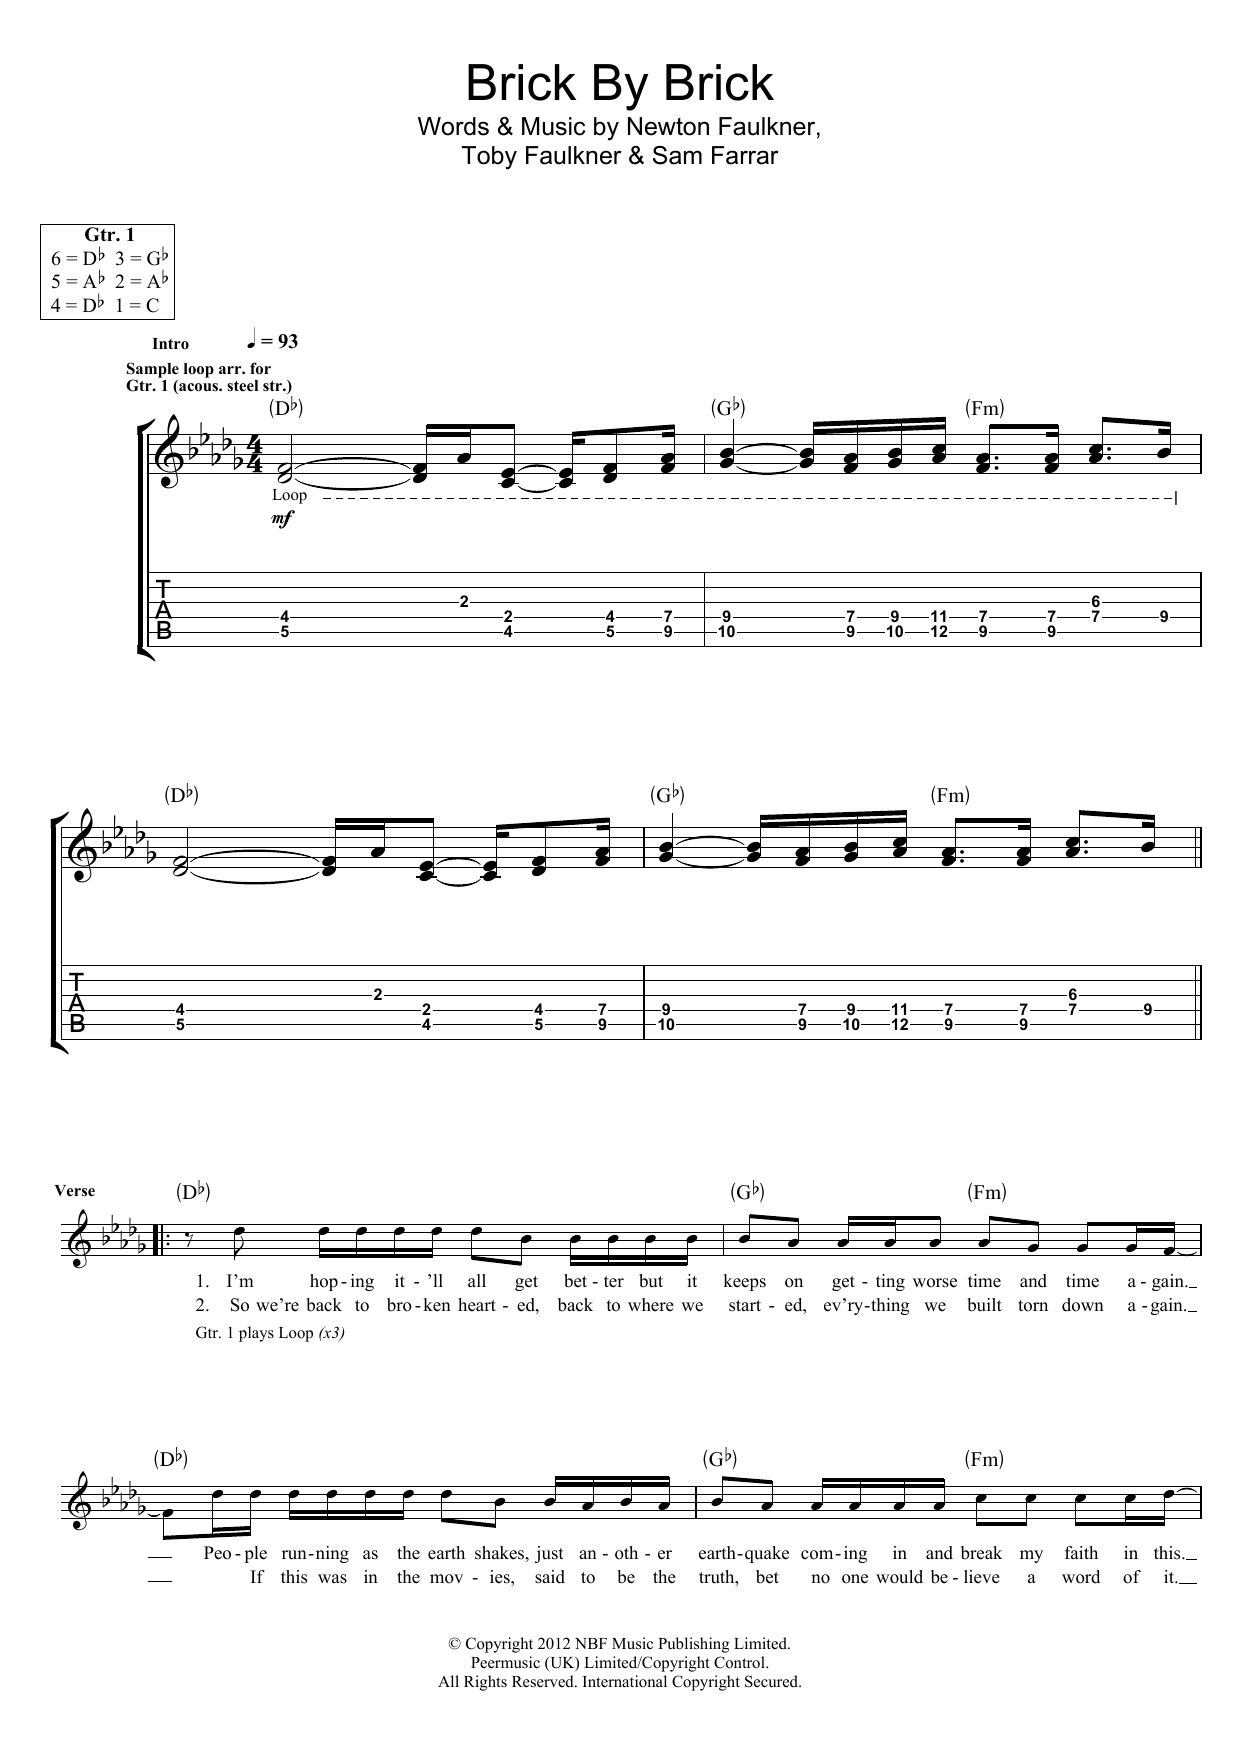 Newton Faulkner Brick By Brick Sheet Music Notes & Chords for Guitar Tab - Download or Print PDF